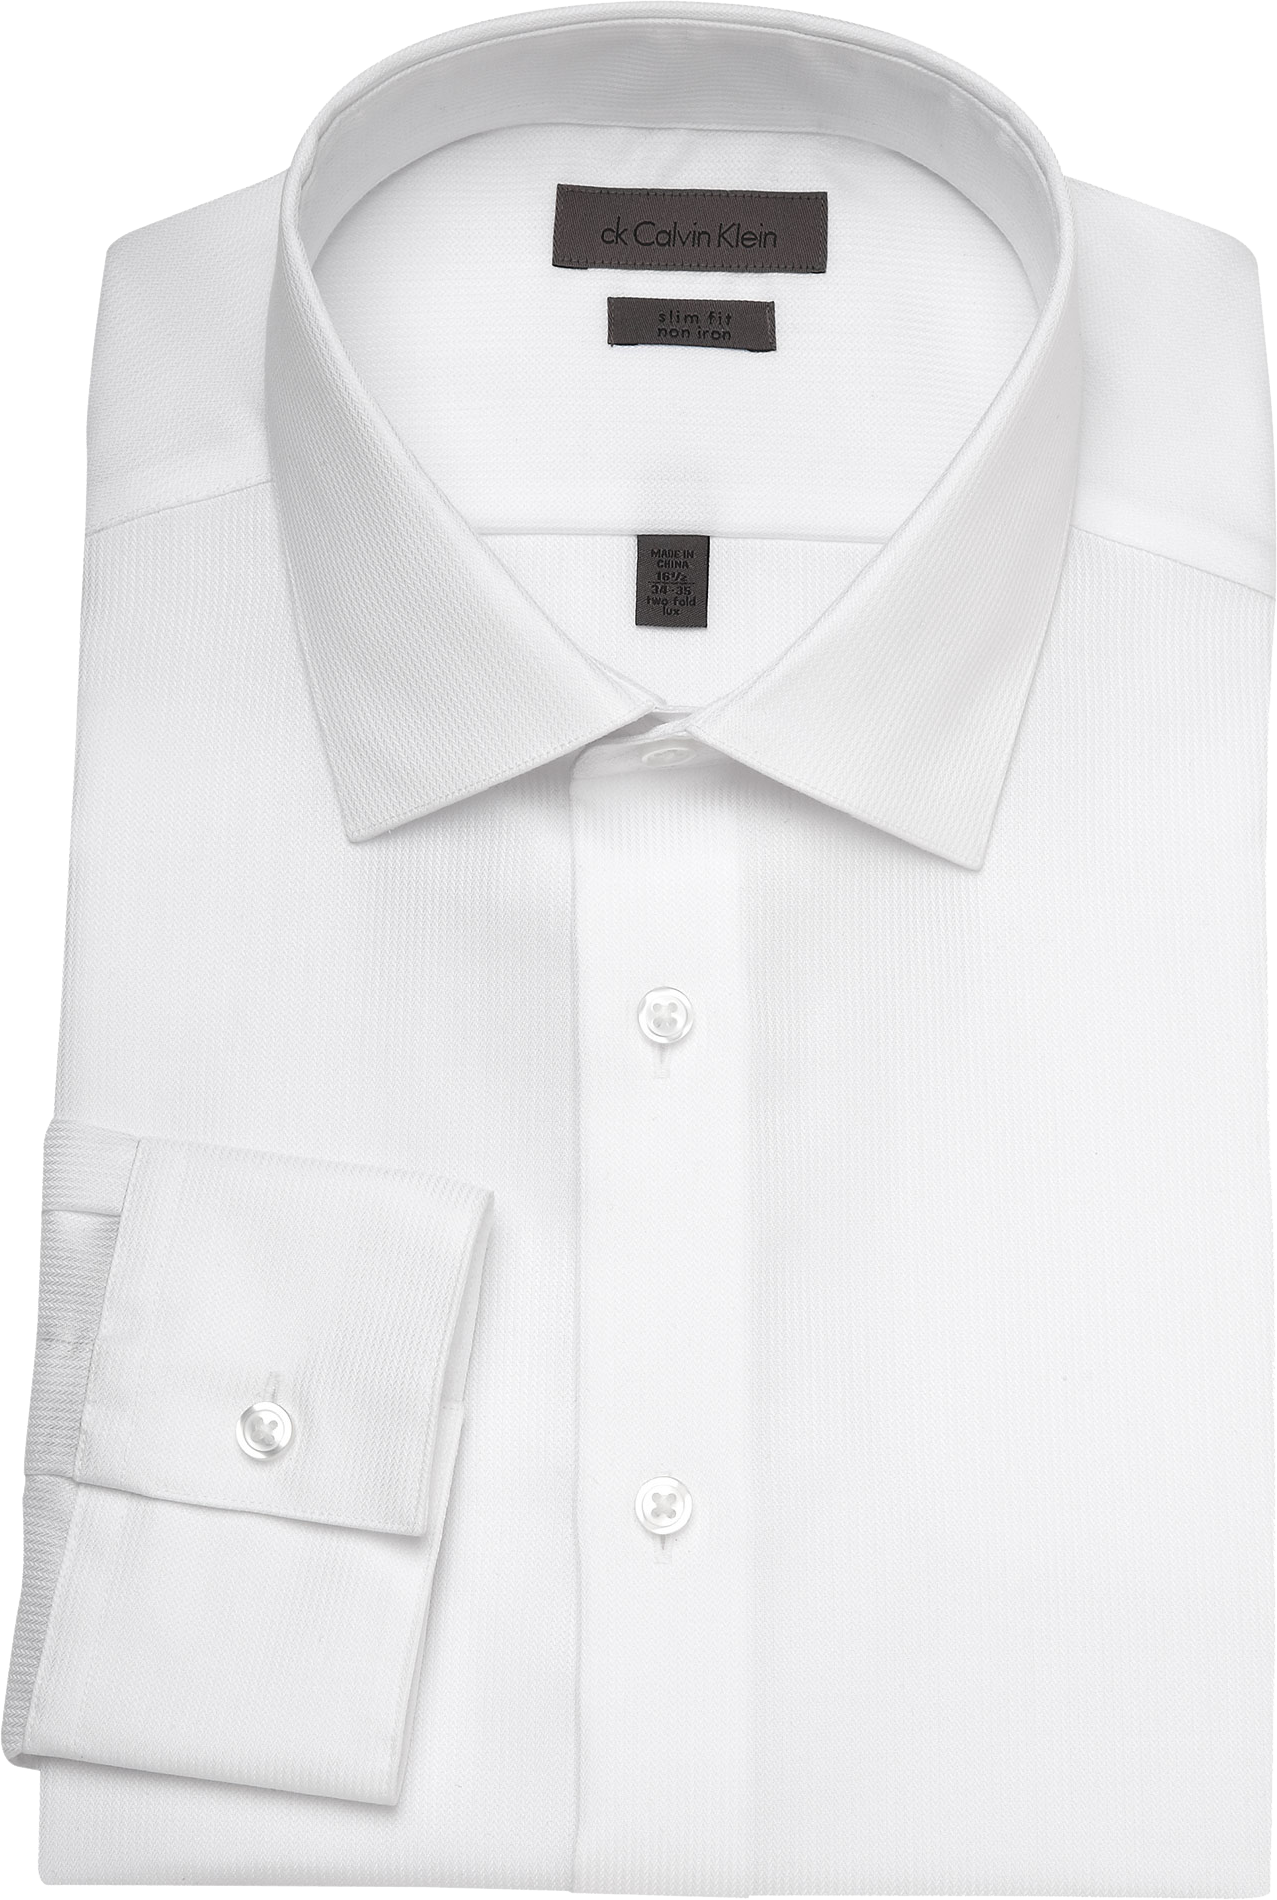 Calvin Klein White Corded Slim Fit Non-Iron Dress Shirt - Slim Fit ...